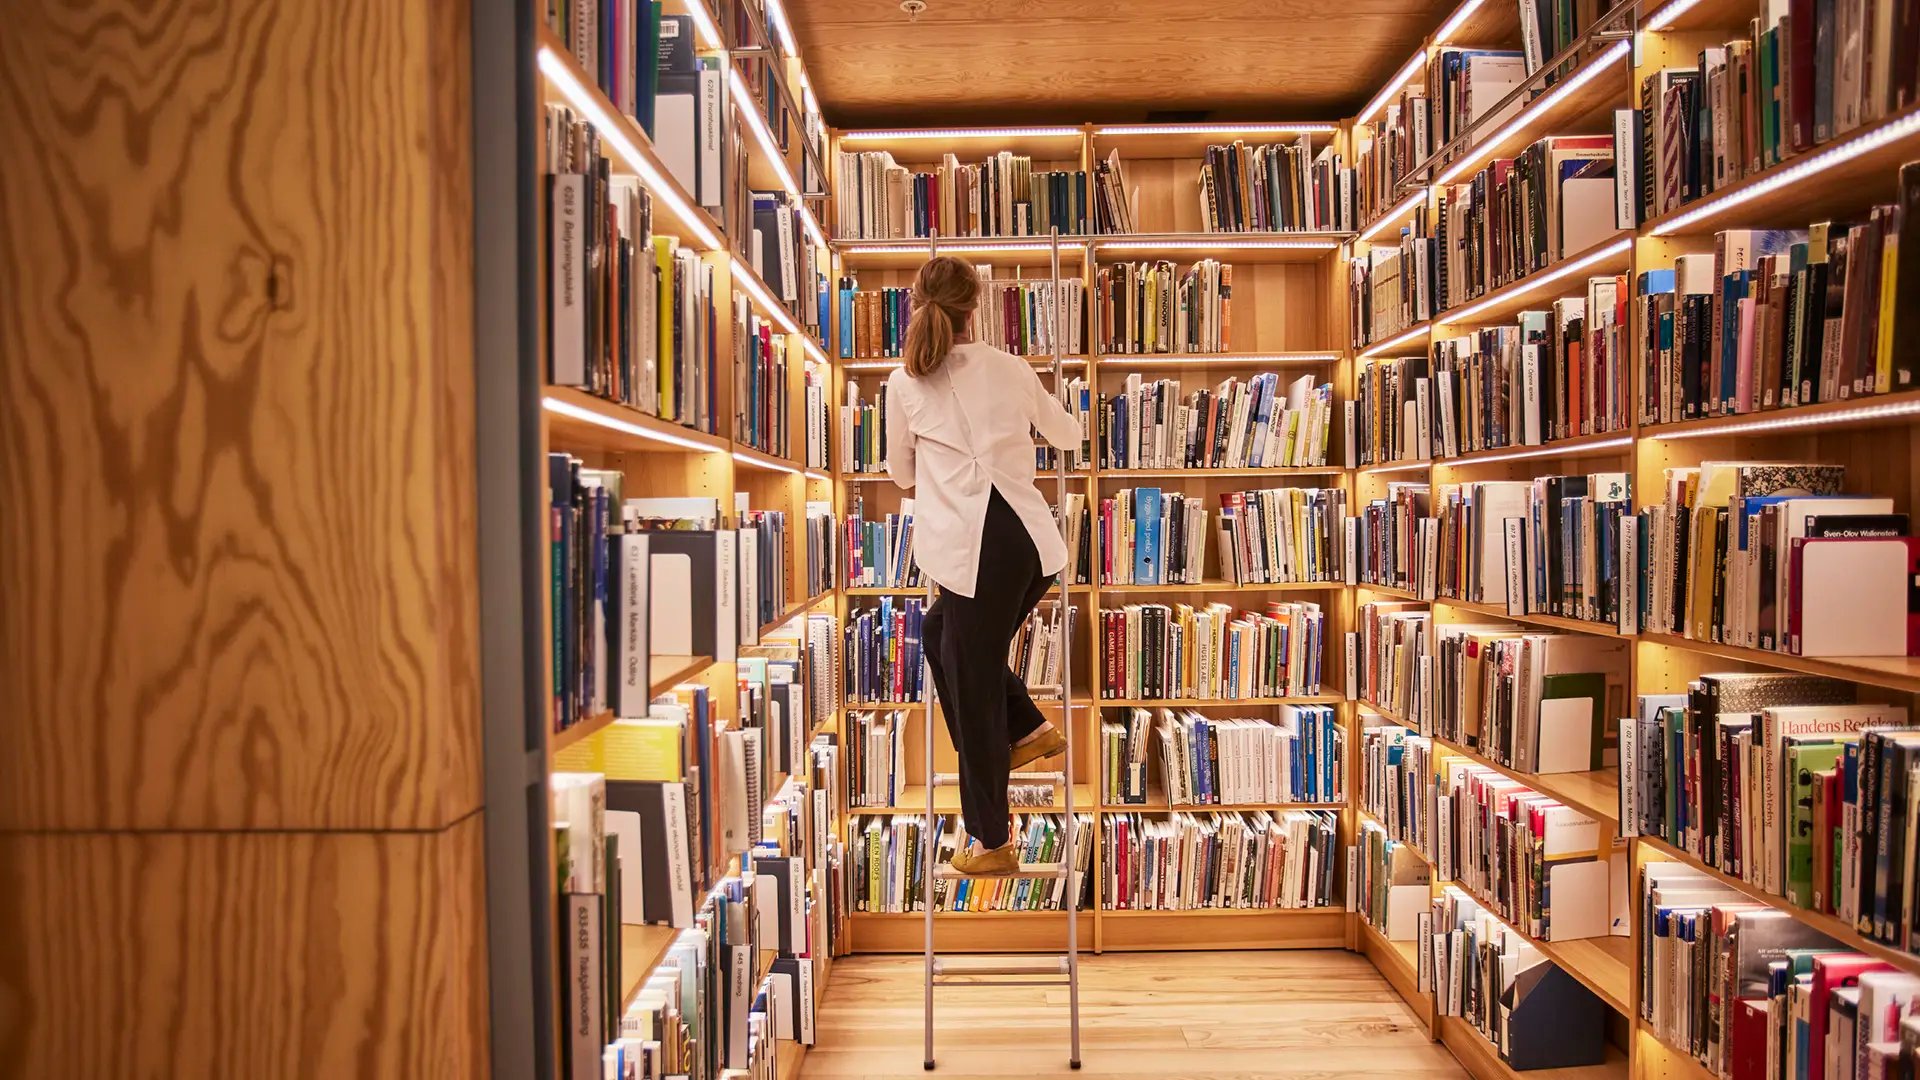 Bookshelves in the library